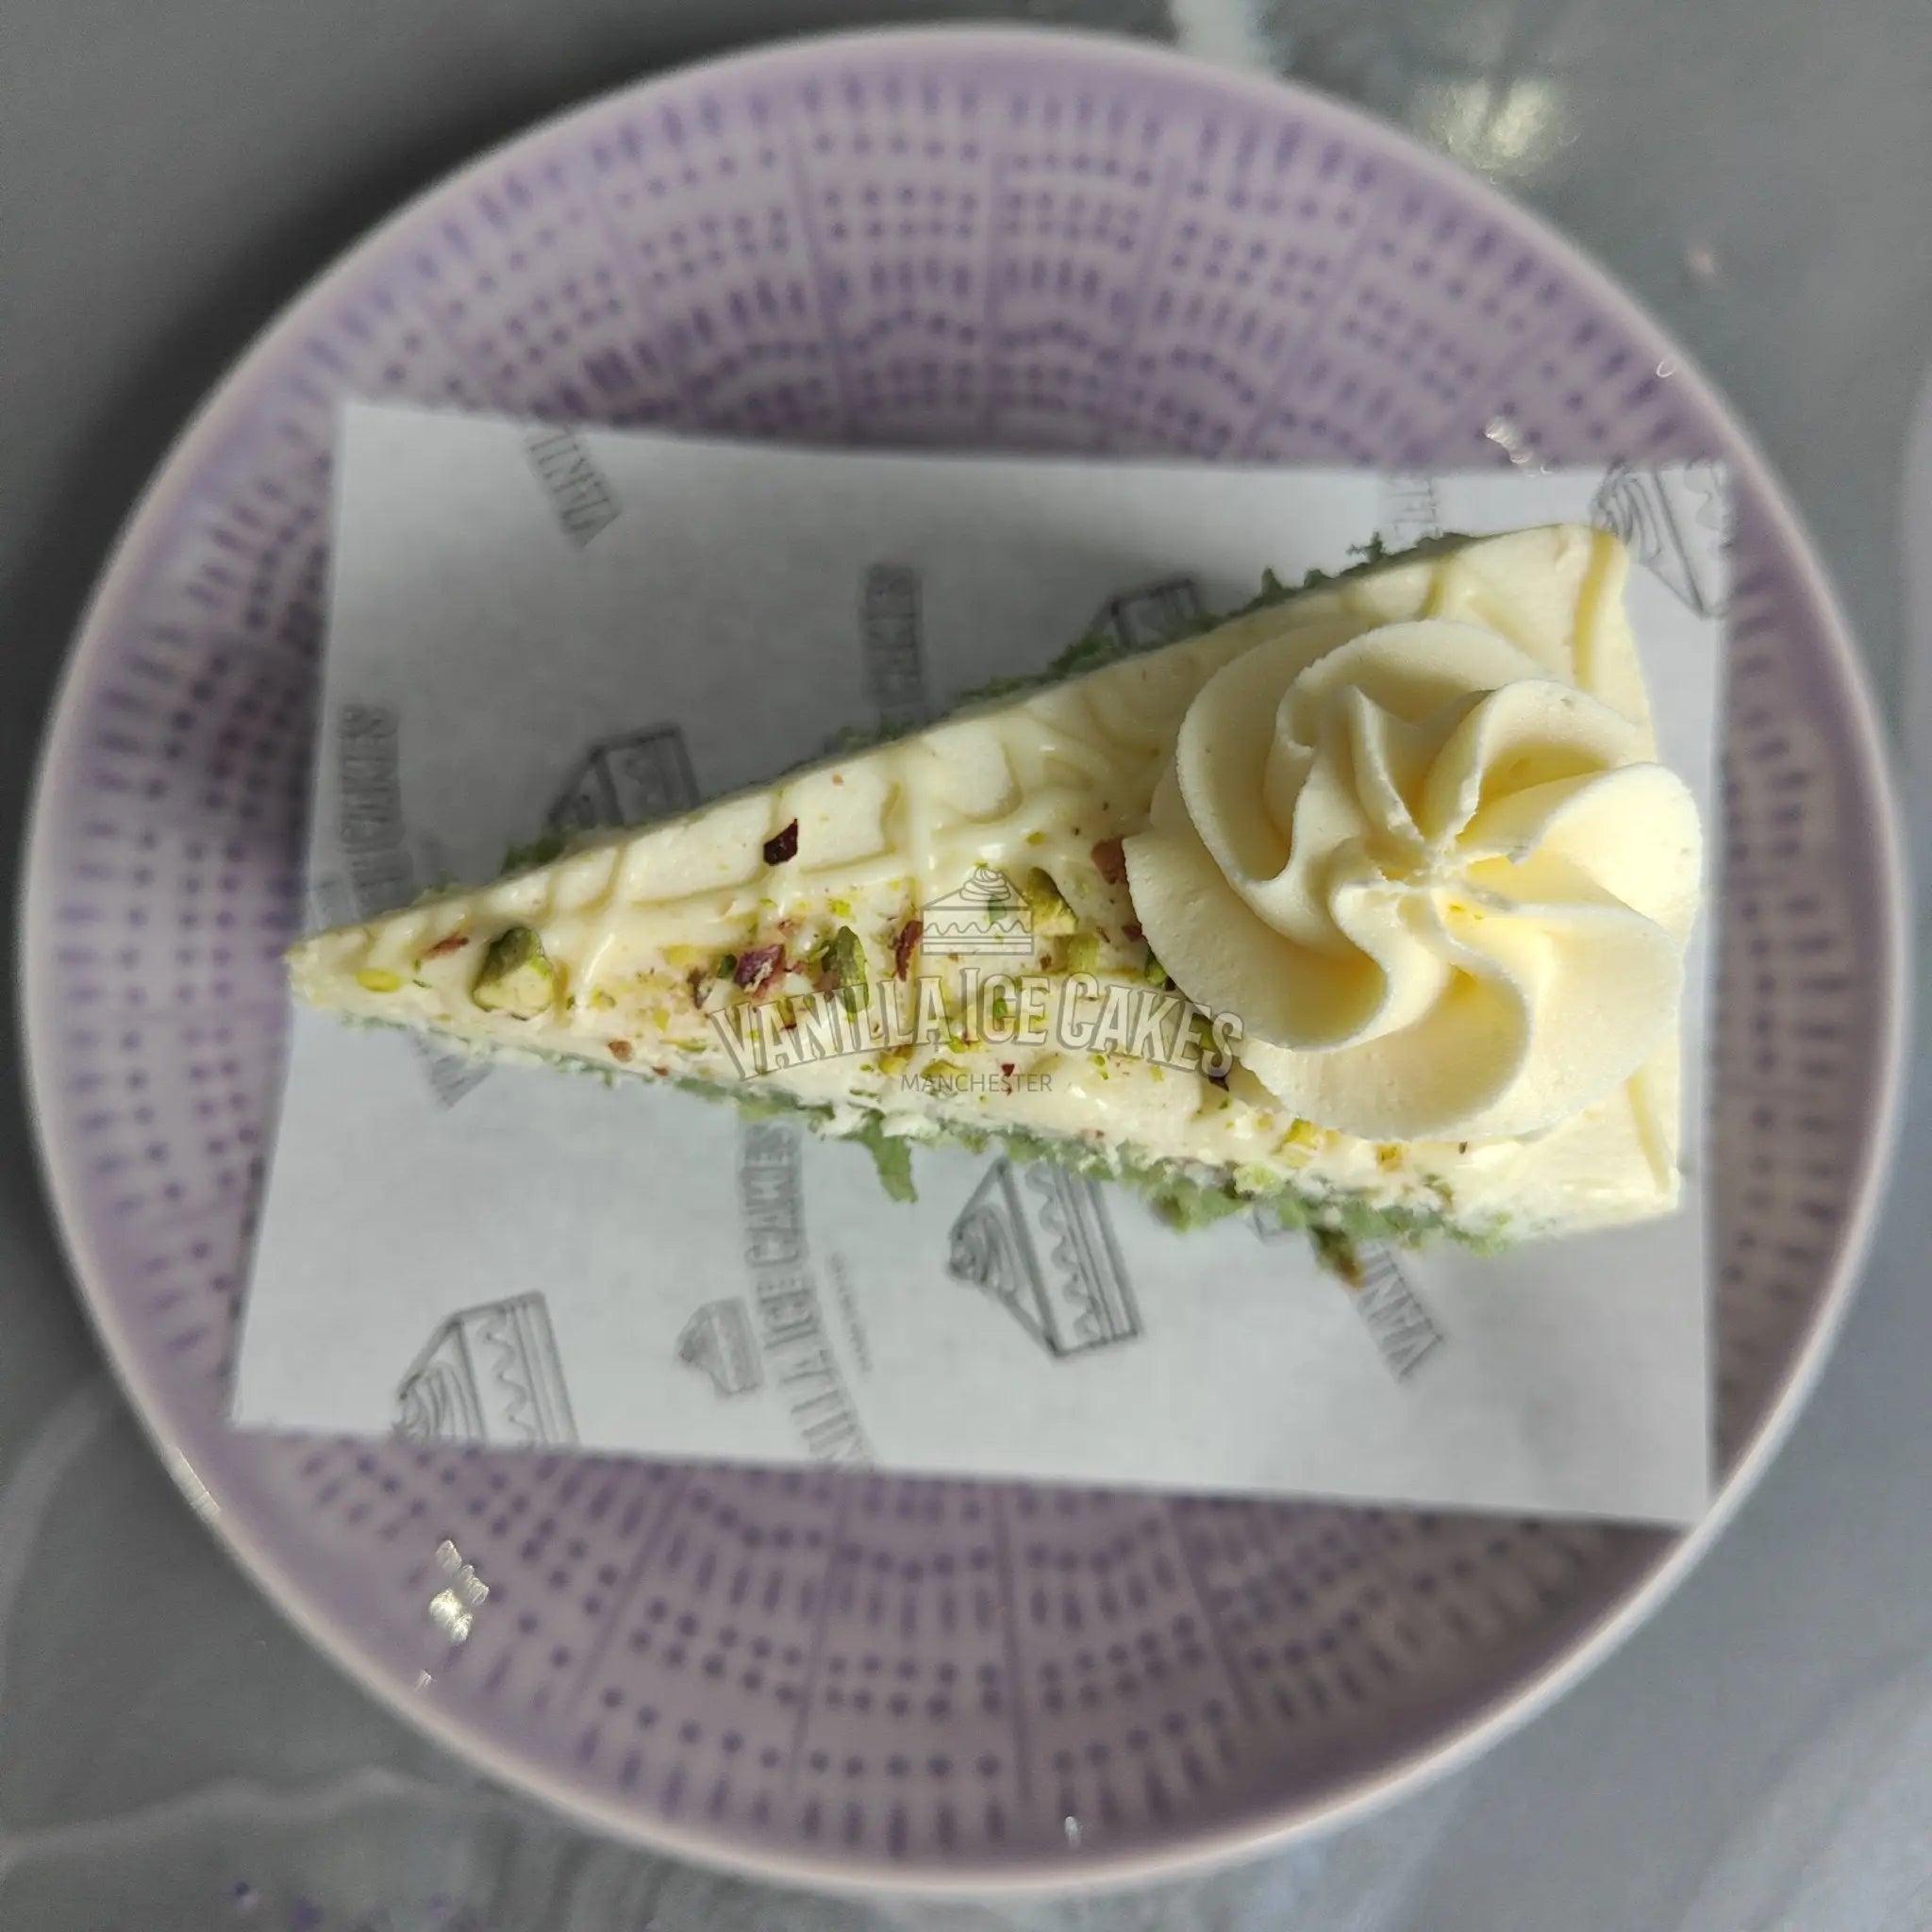 White Chocolate & Pistachio Celebration Cake